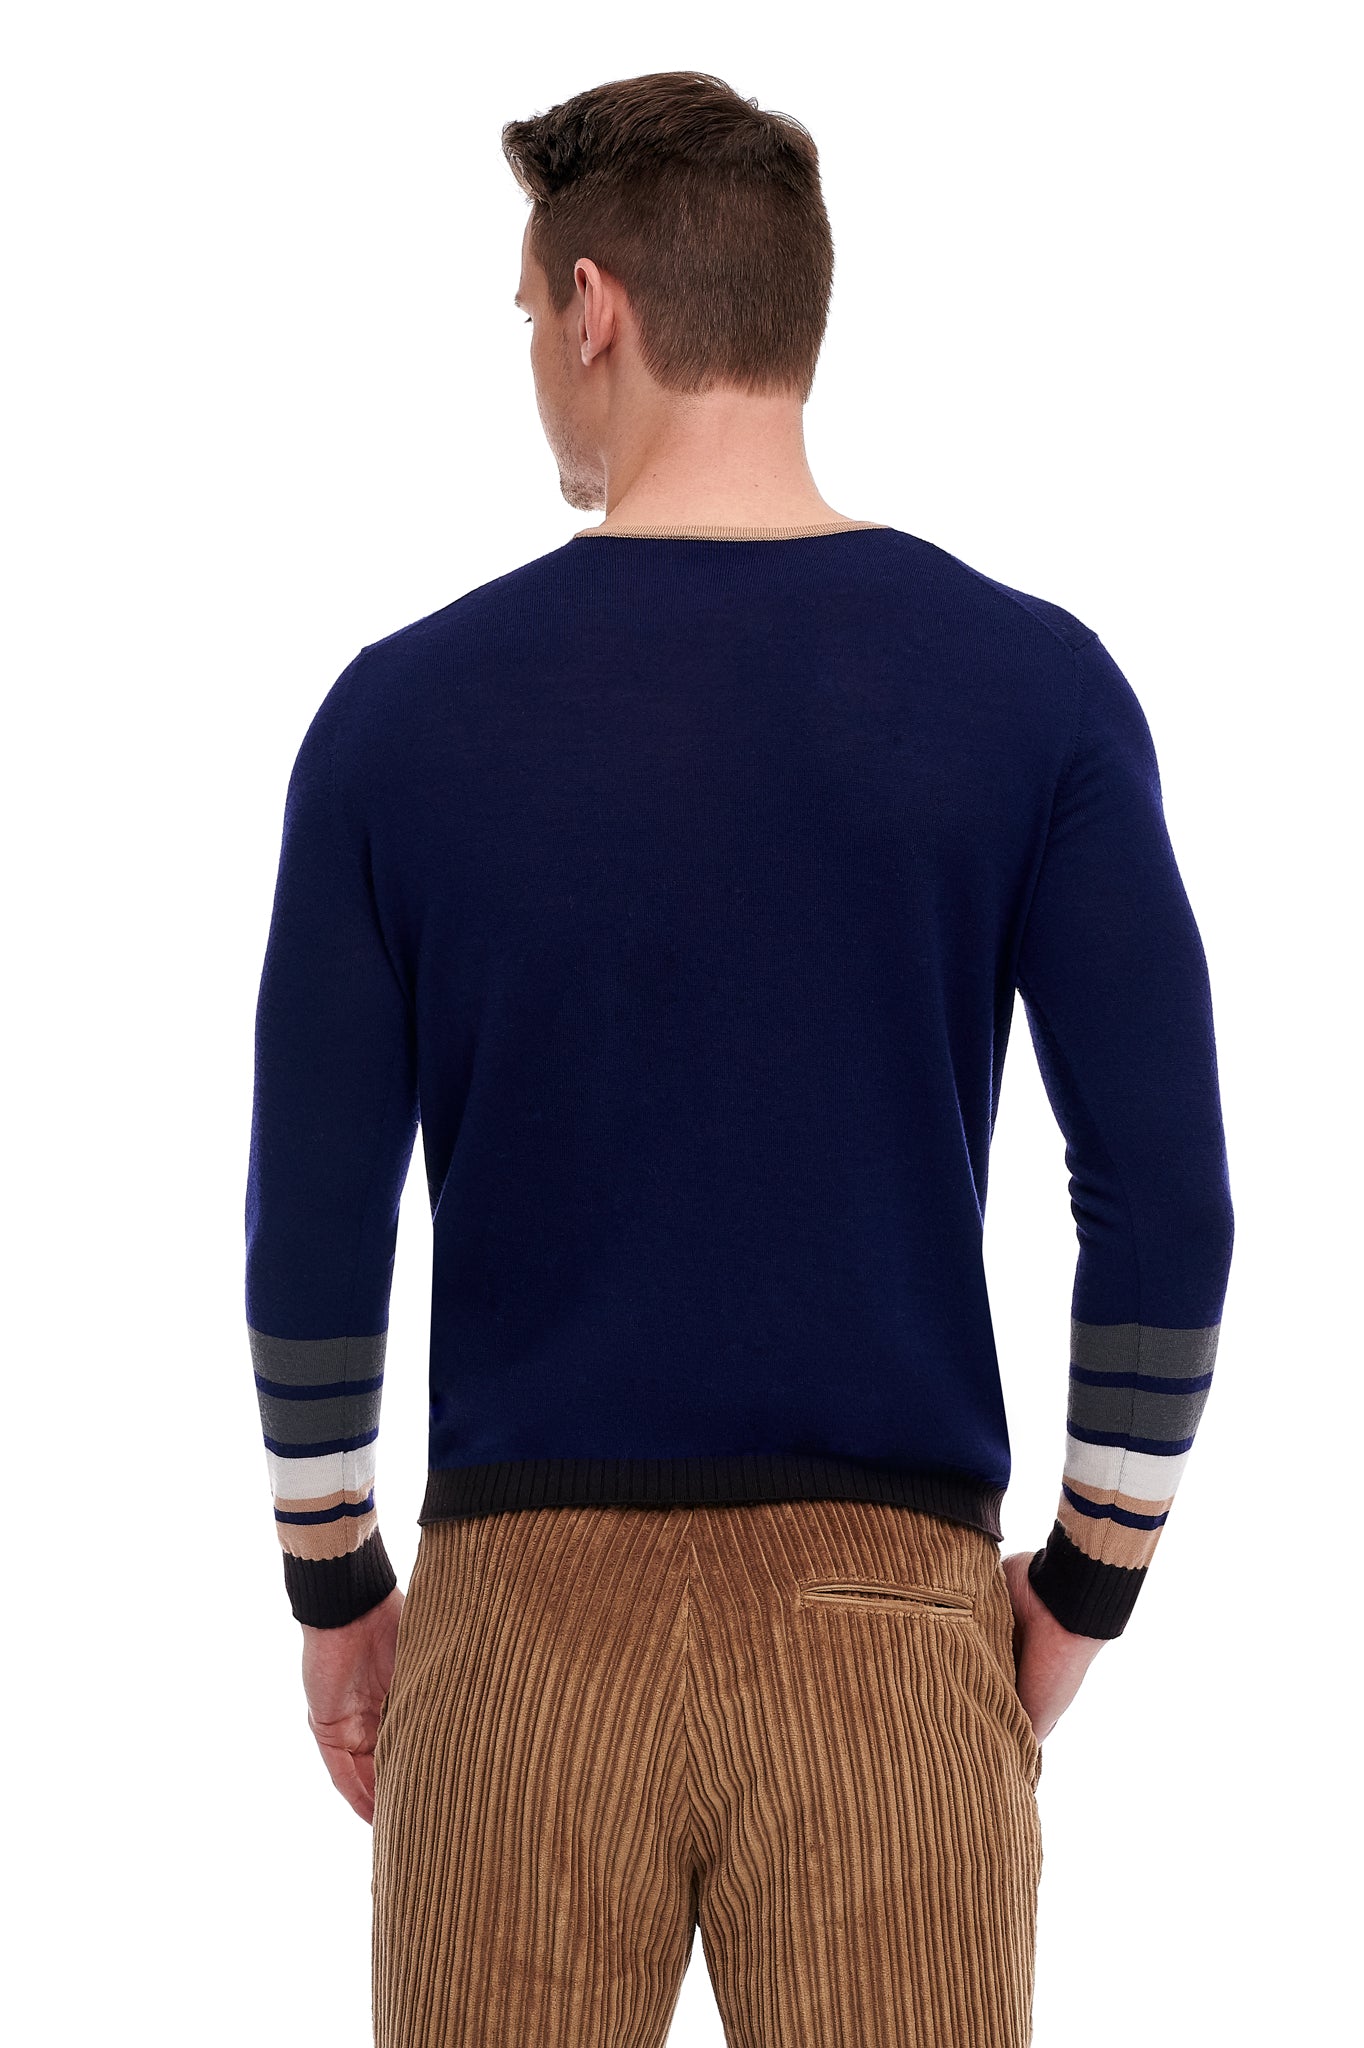 Maglione in lana fine e cashmere blu navy